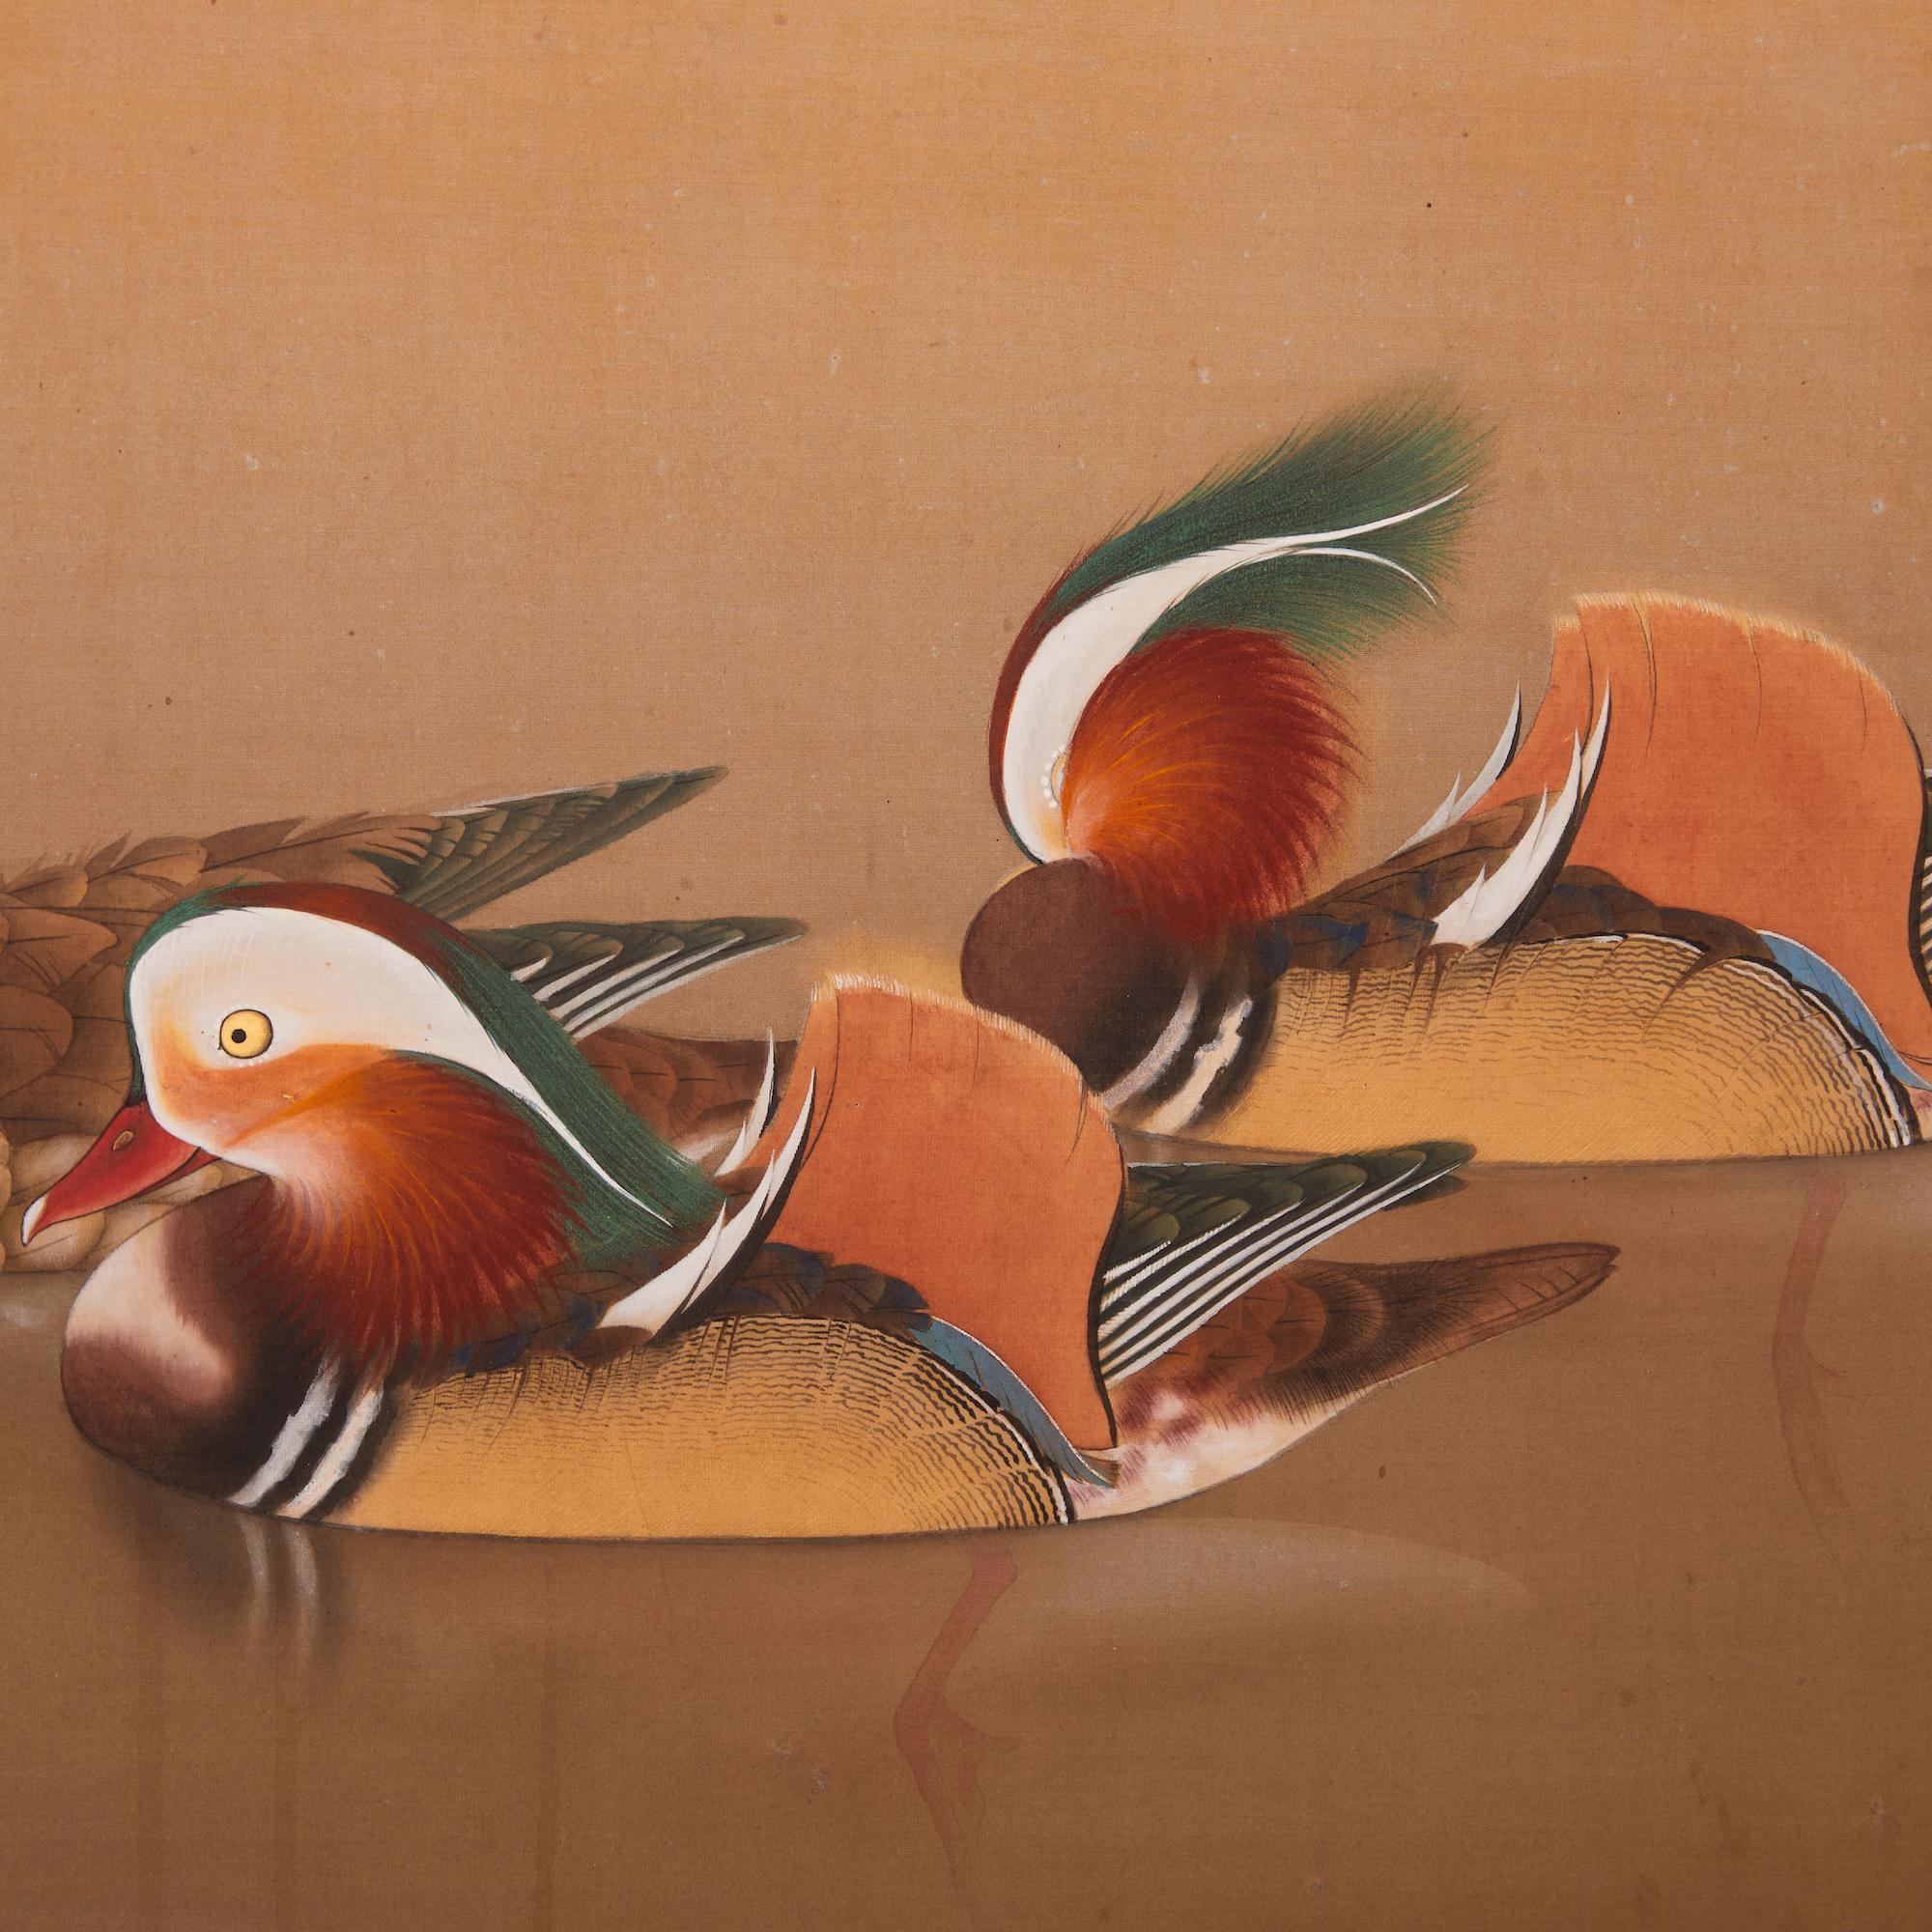 mandarin duckling for sale